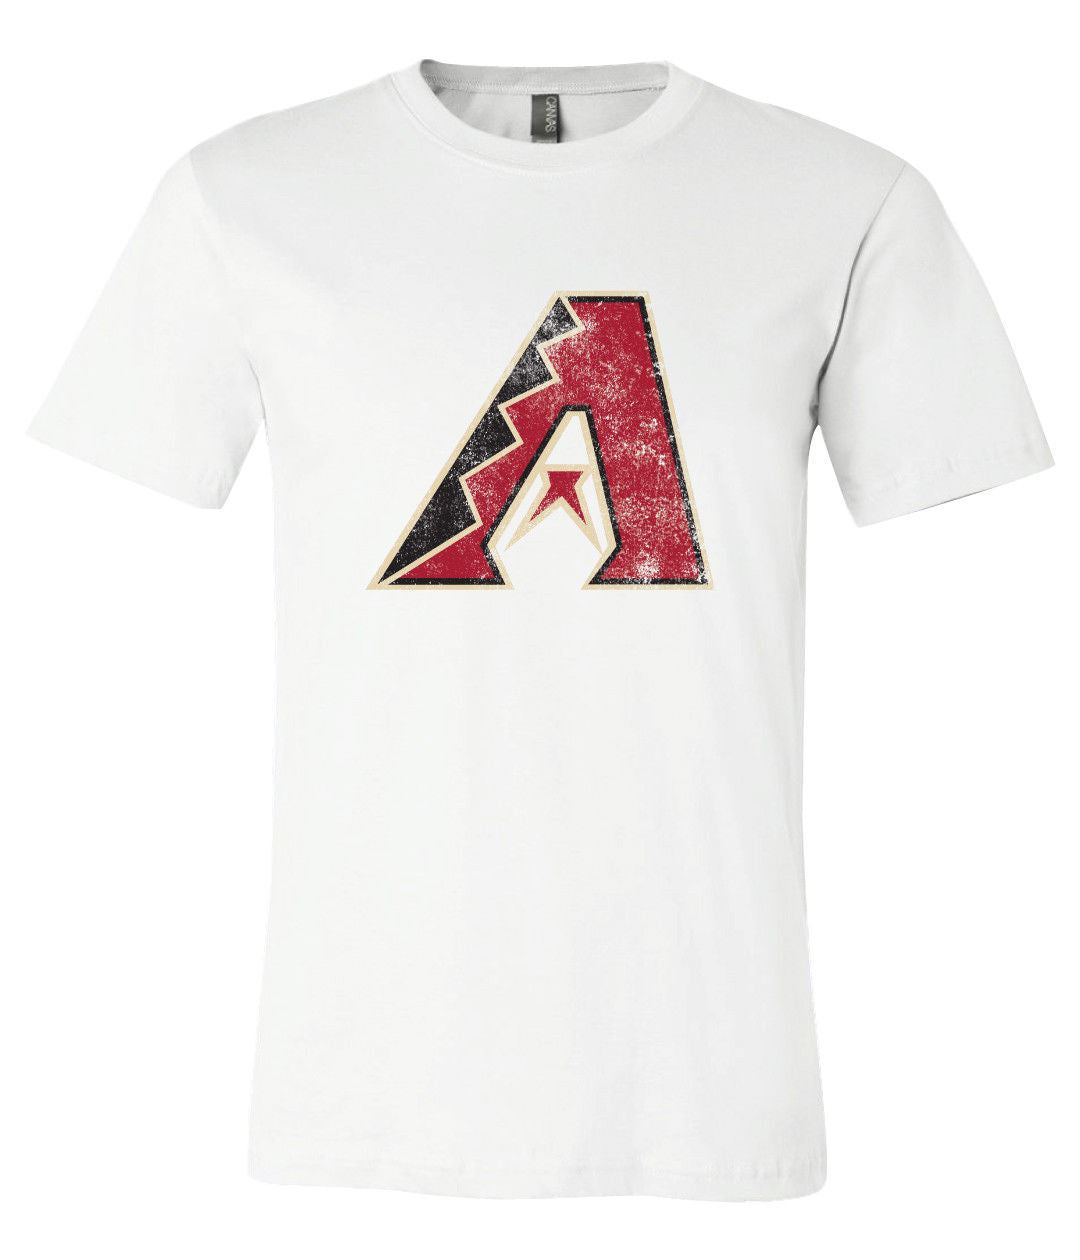 Arizona Diamondbacks Distressed Vintage AZ logo T shirt 6 Sizes S-3XL!